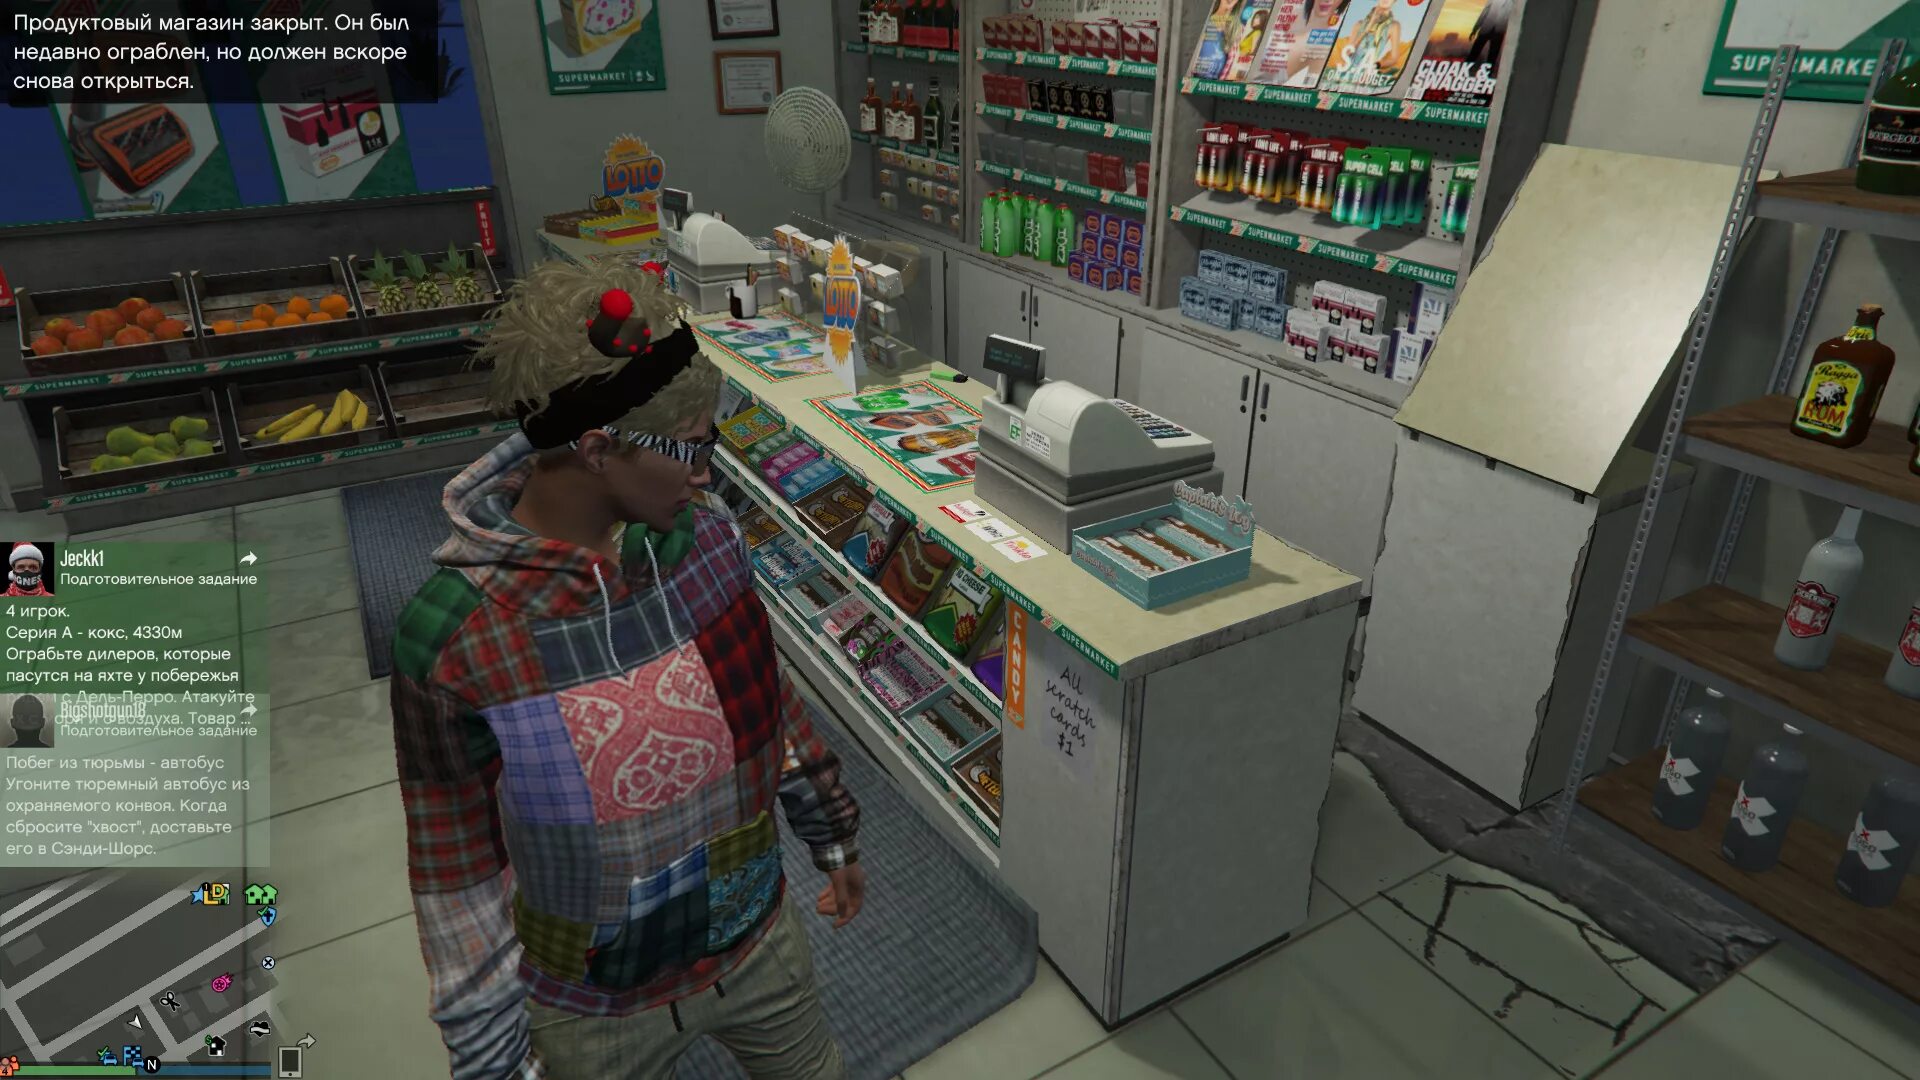 GTA 5 магазины для ограбления. Ограбления люберельный магазин в ГТА 5. Ограбление магазина. Игра про ограбление магазина. Игра грабить магазин